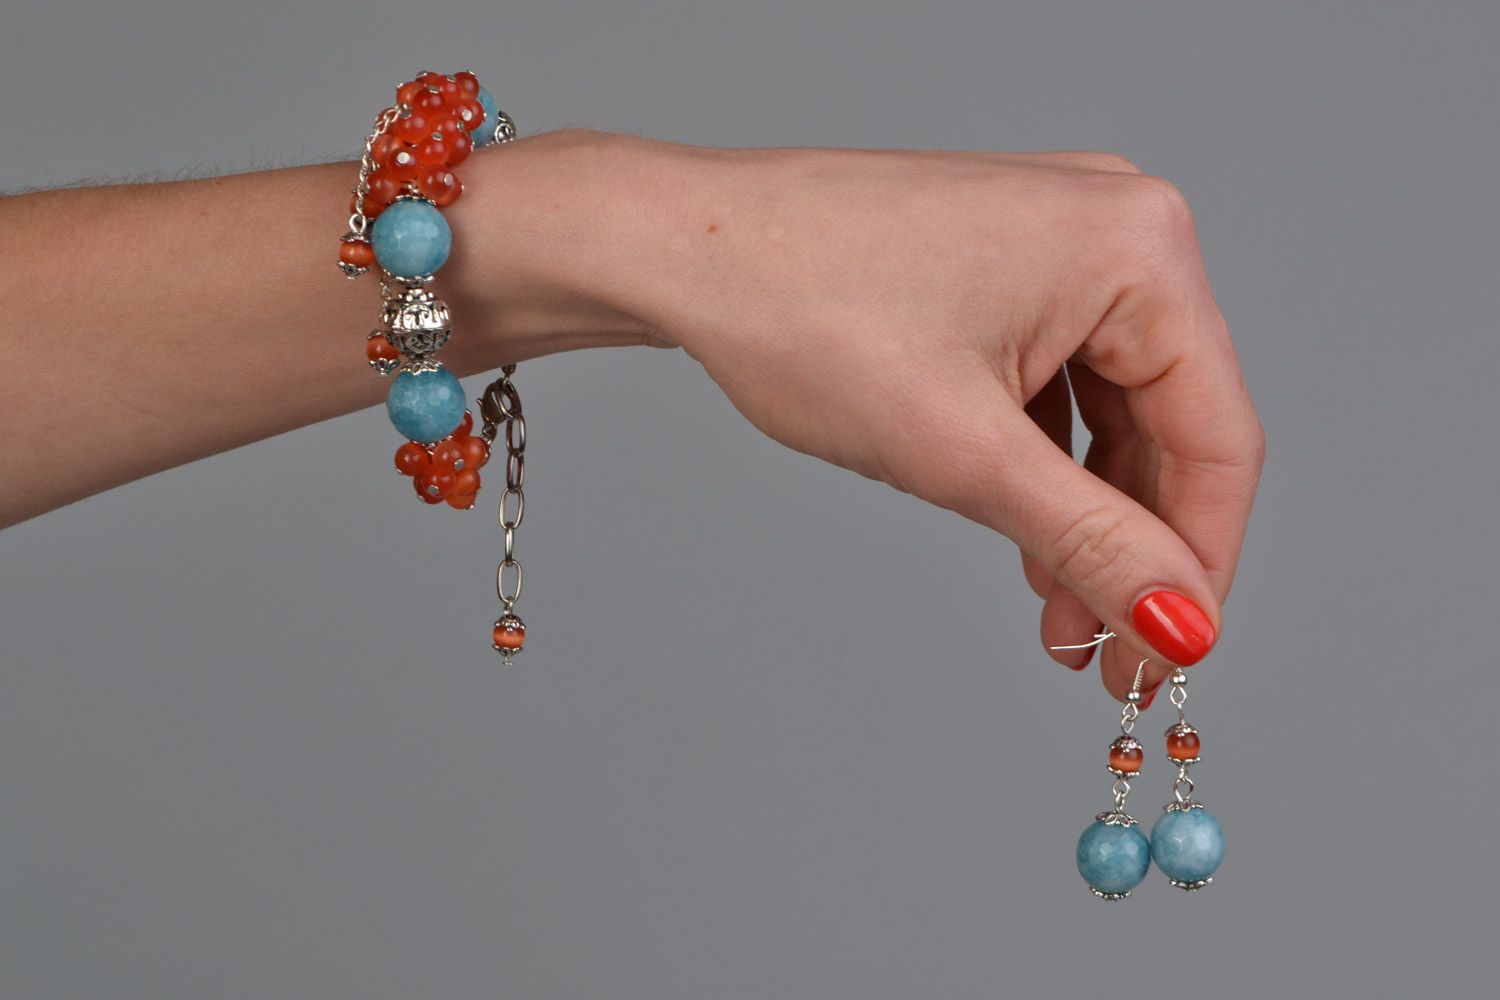 Handmade natural stone jewelry set 2 items wrist bracelet and earrings Lady photo 2